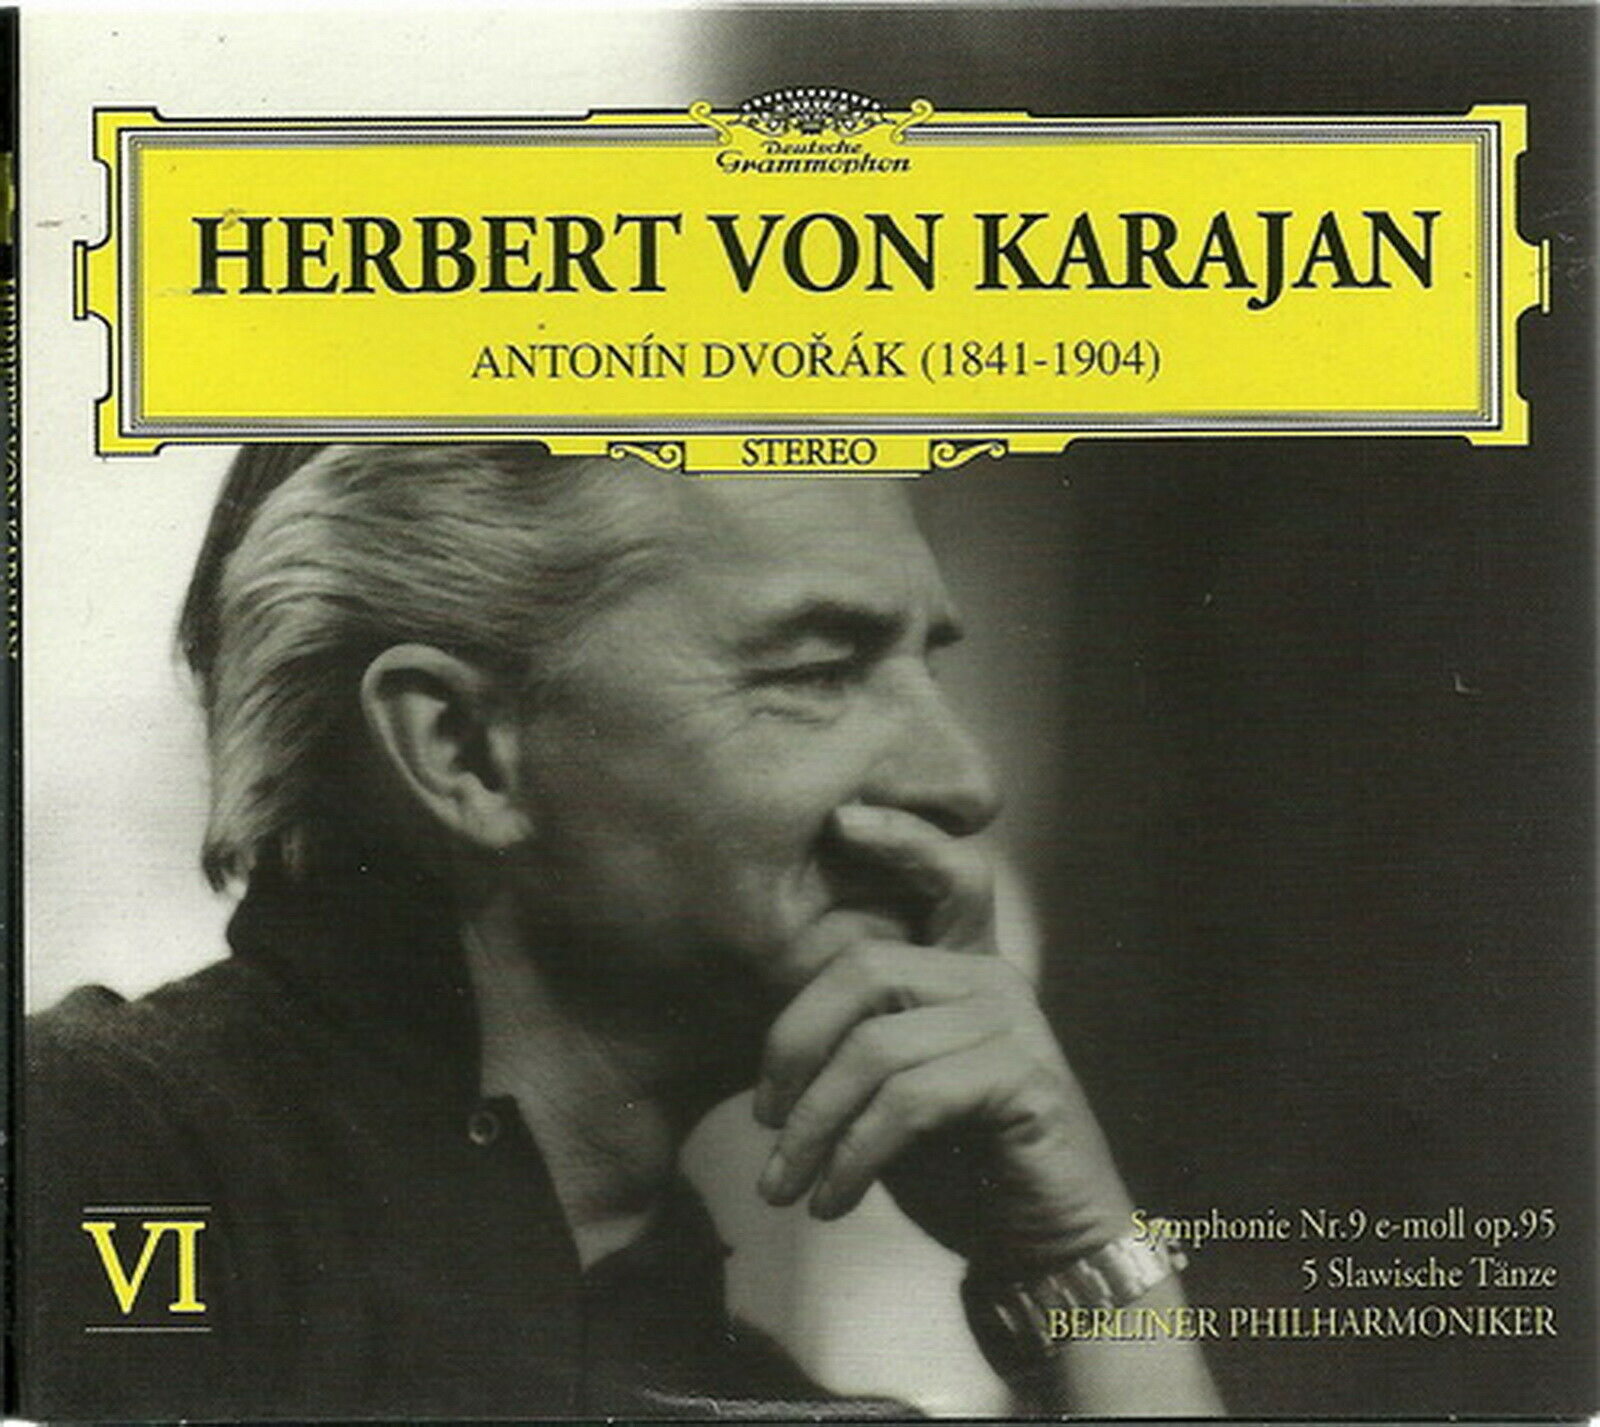 Primary image for HERBERT VON KARAJAN ANTONIN DVORAK Symphonie Nr.9 Slawische Tanze 9 tracks CD